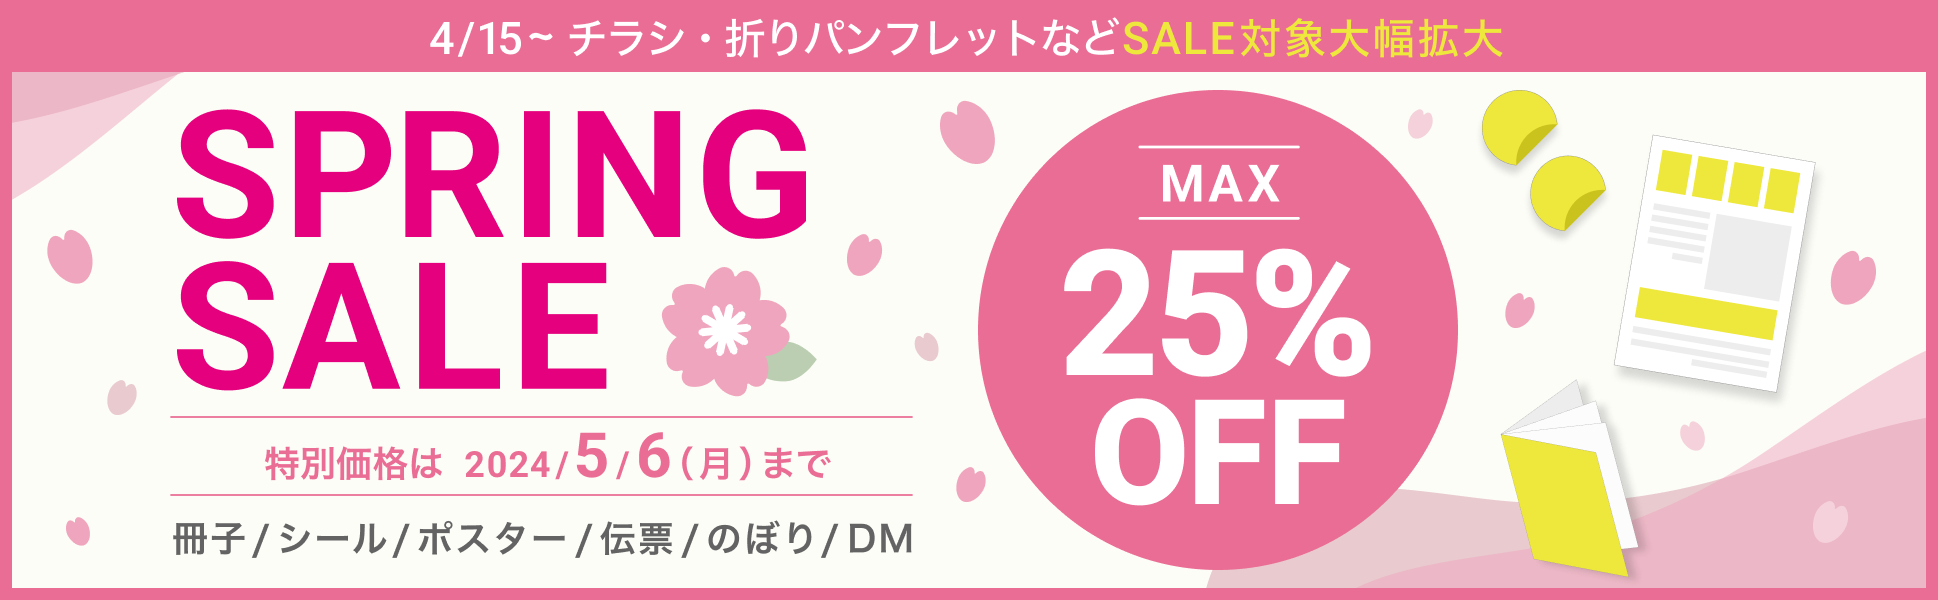 【最大25%OFF!】SPRING SALE